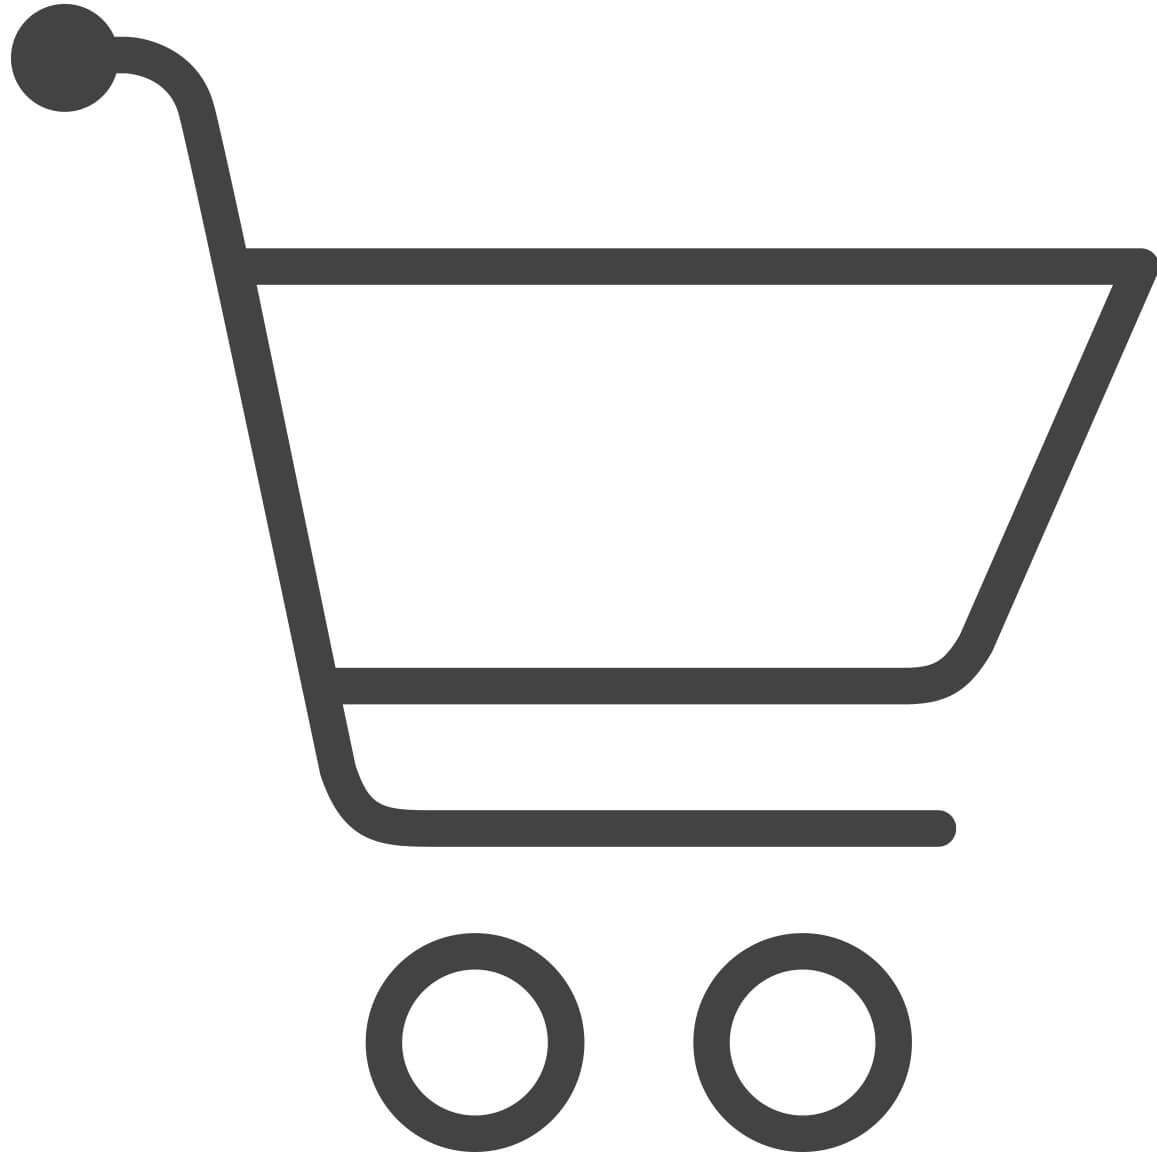 Shopping-Cart.jpg